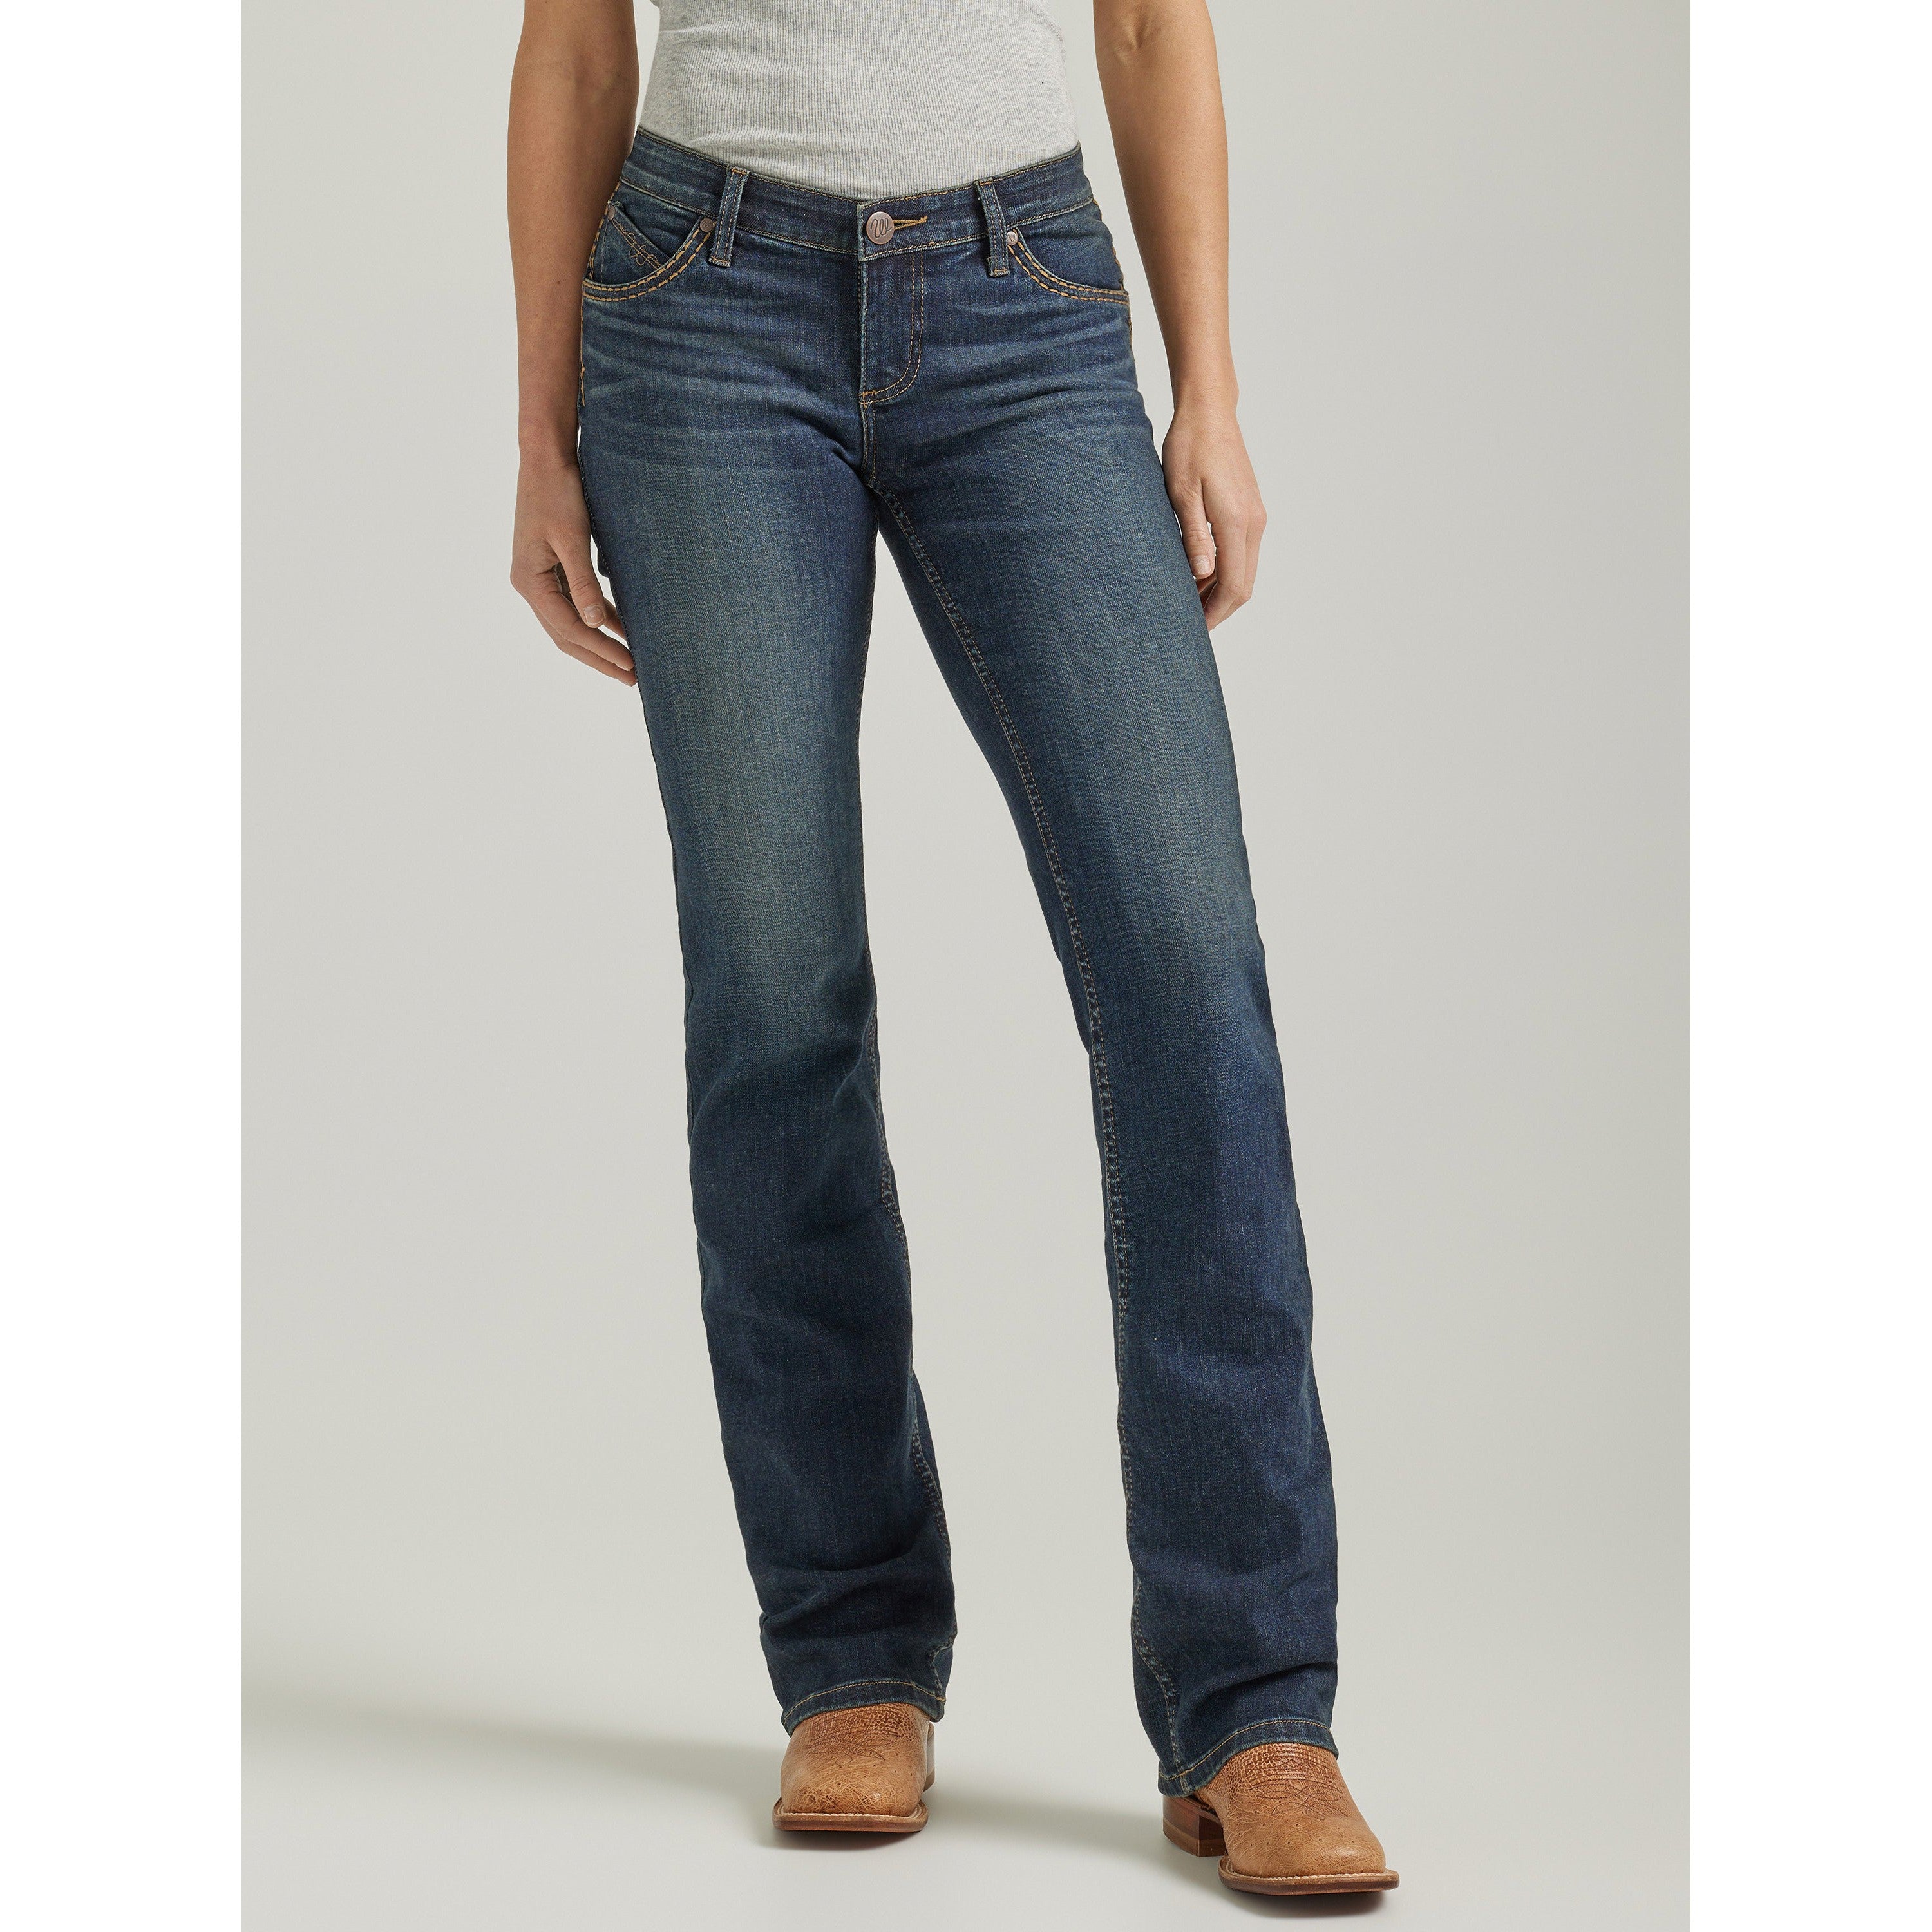 Earl Jean Low Rise Boot Cut Jeans Blue Size 28 - $15 (70% Off